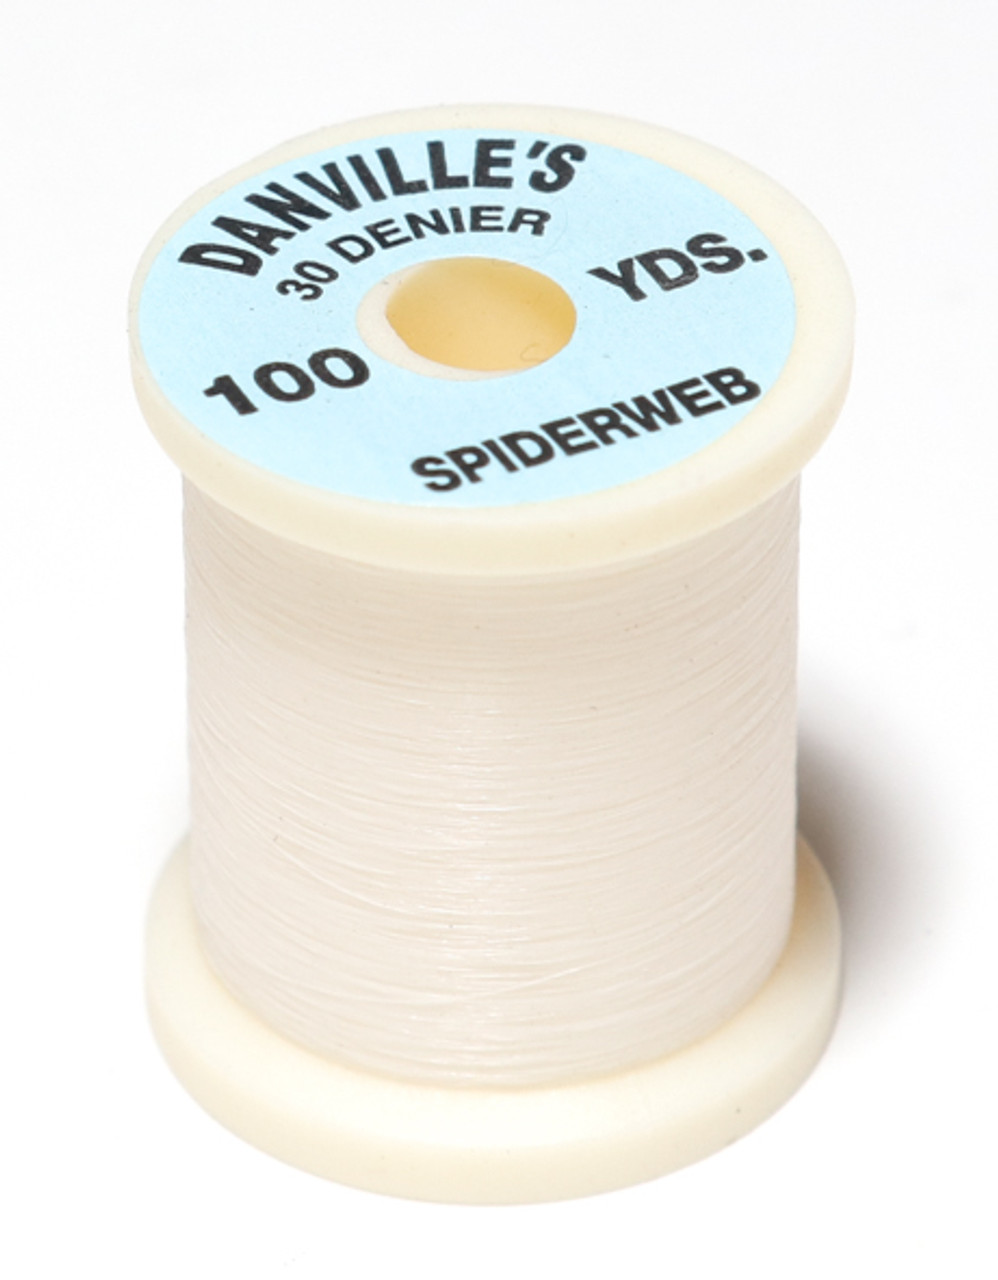 Danville Spiderweb Thread